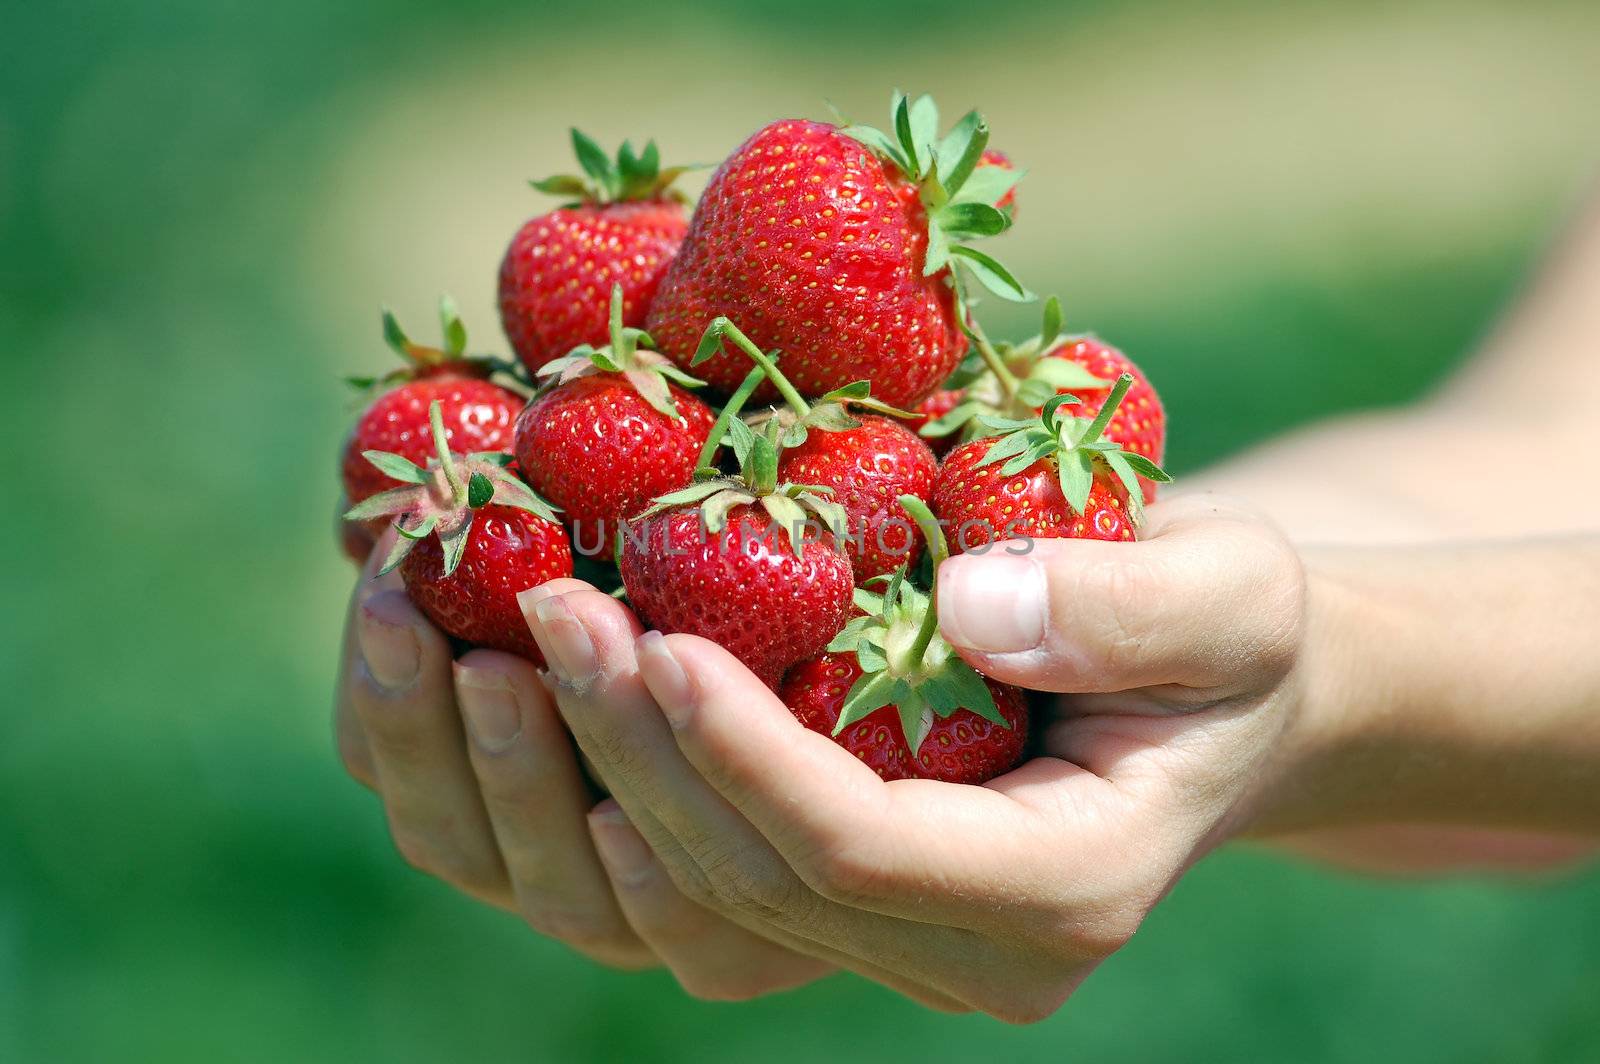 Fresh picked strawberries by Rainman